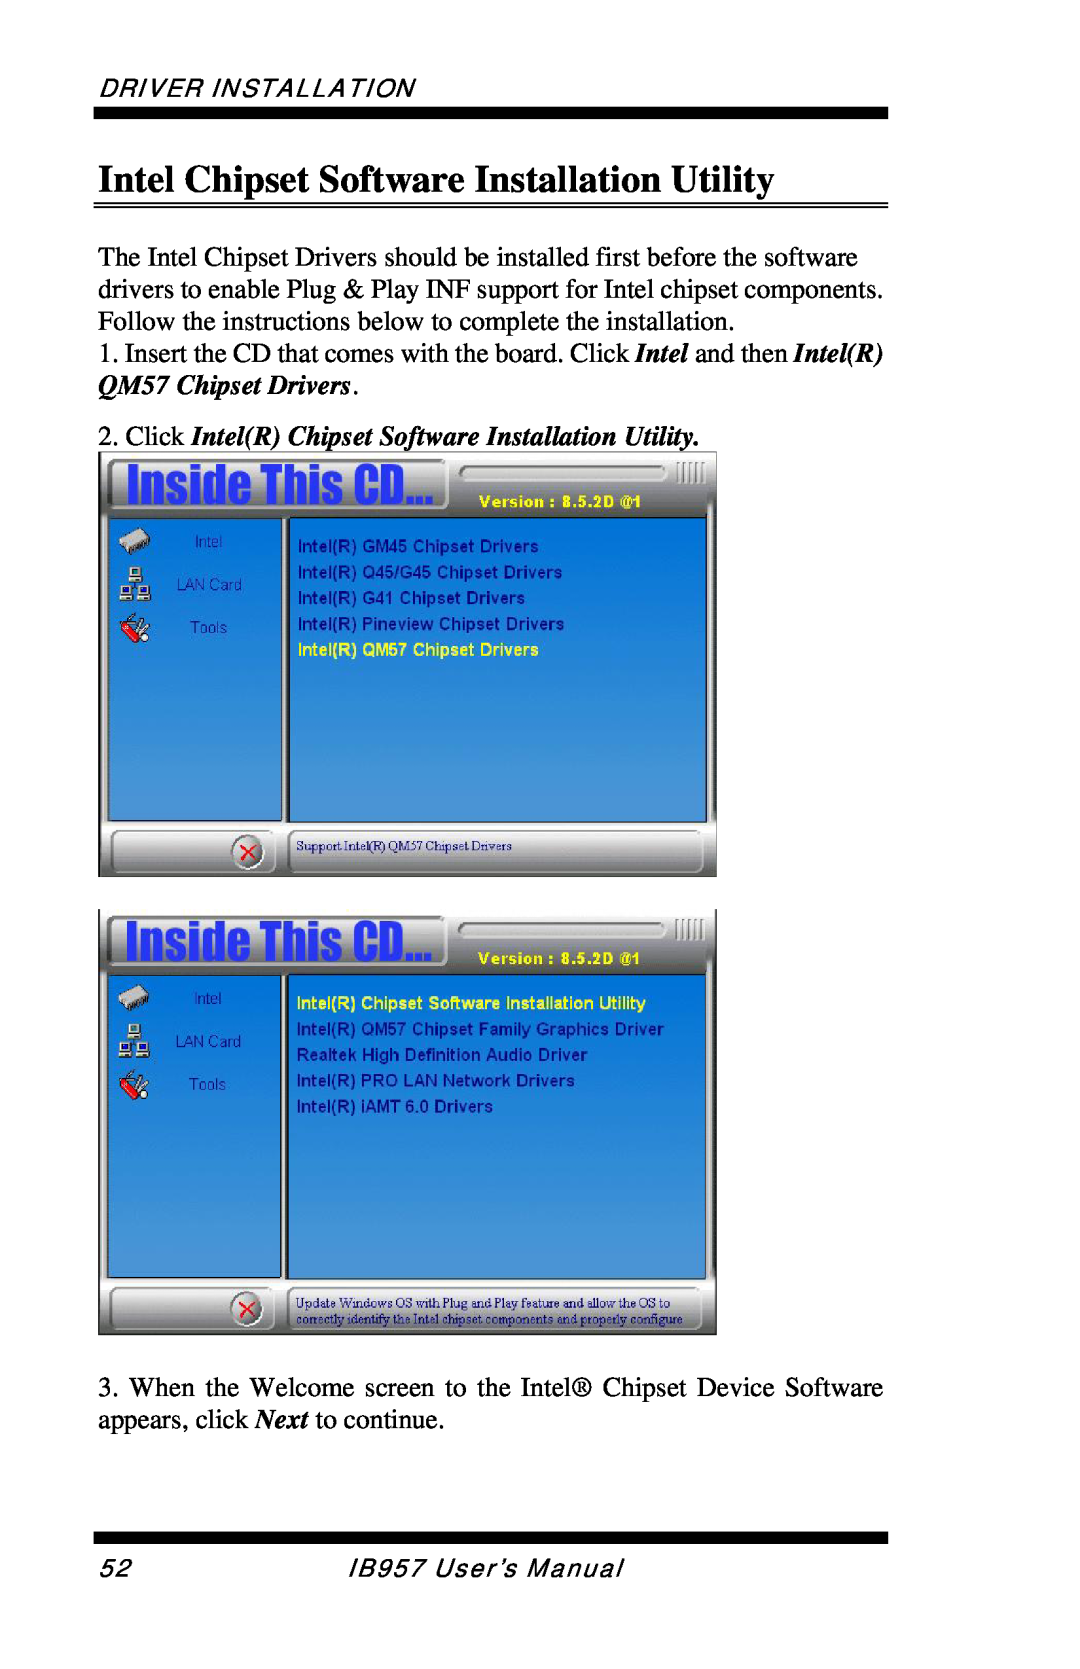 Intel IB957 user manual Intel Chipset Software Installation Utility, Click IntelR Chipset Software Installation Utility 